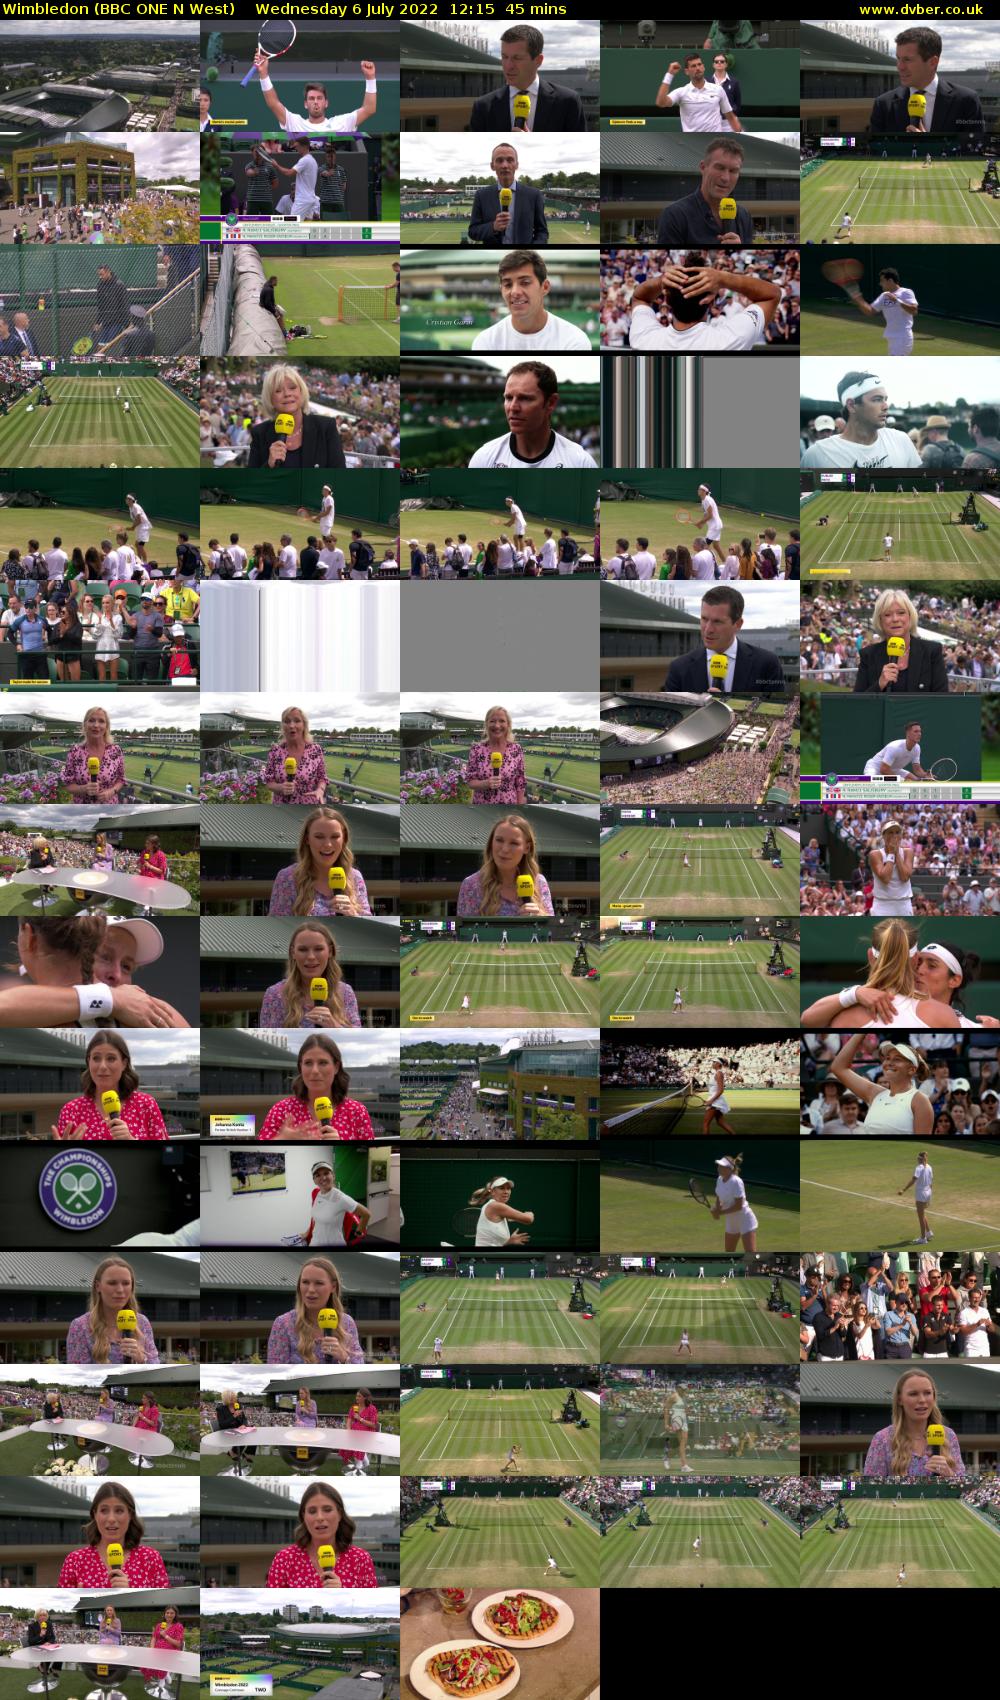 Wimbledon (BBC ONE N West) Wednesday 6 July 2022 12:15 - 13:00